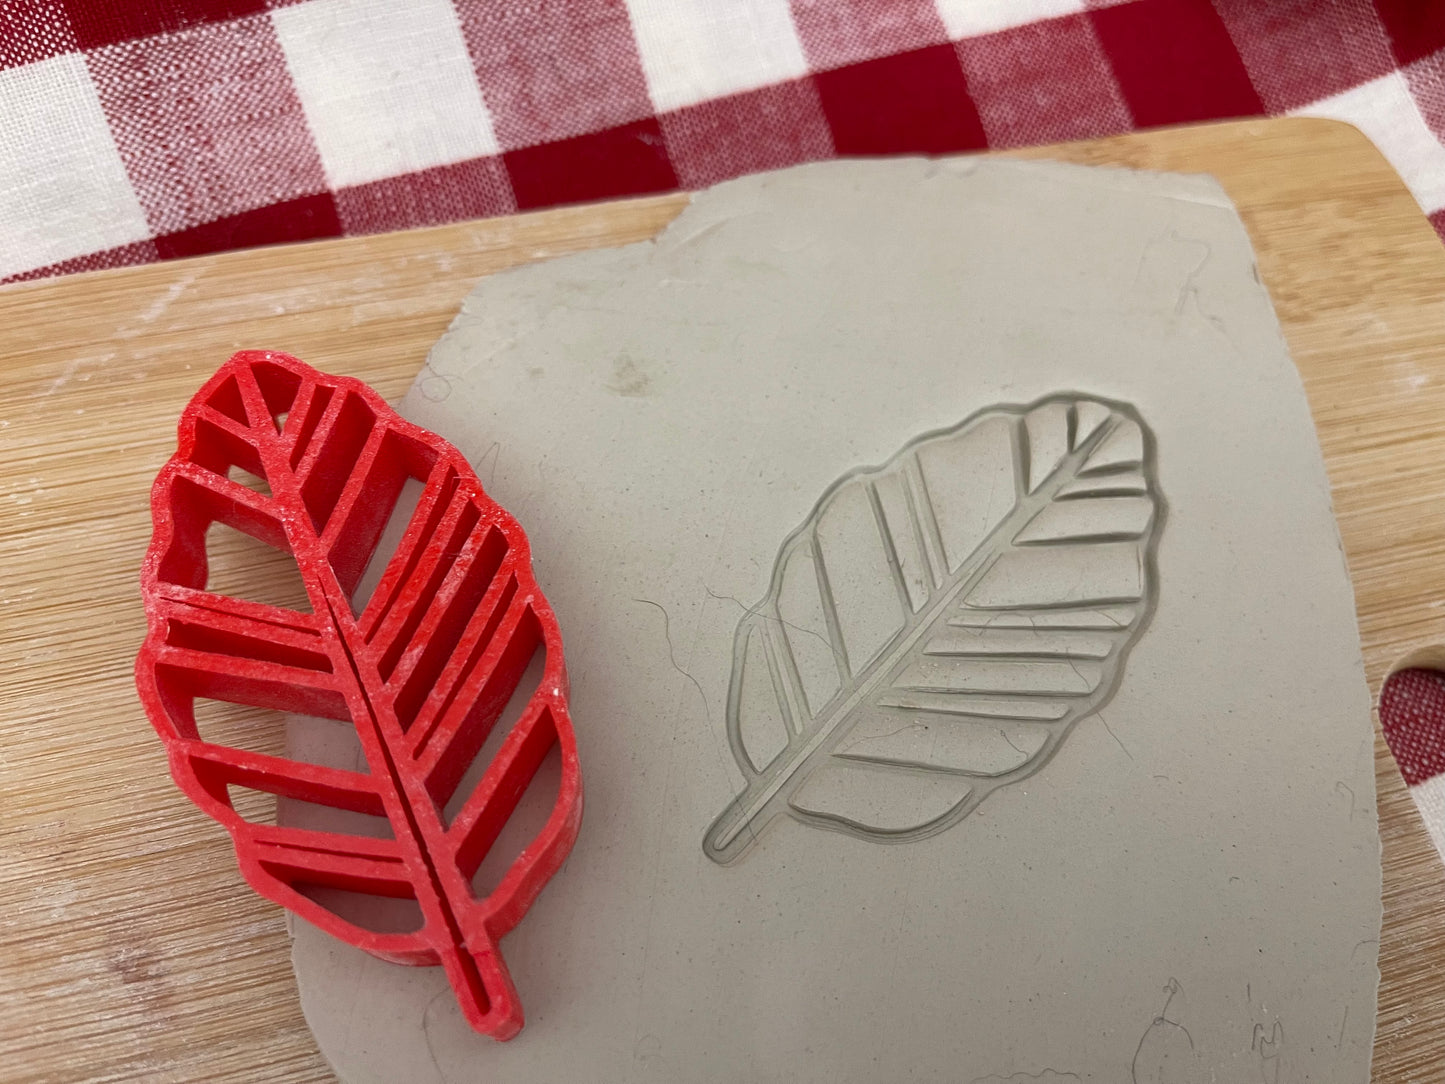 Tropical Banana leaf stamp - plastic 3D printed, multiple sizes